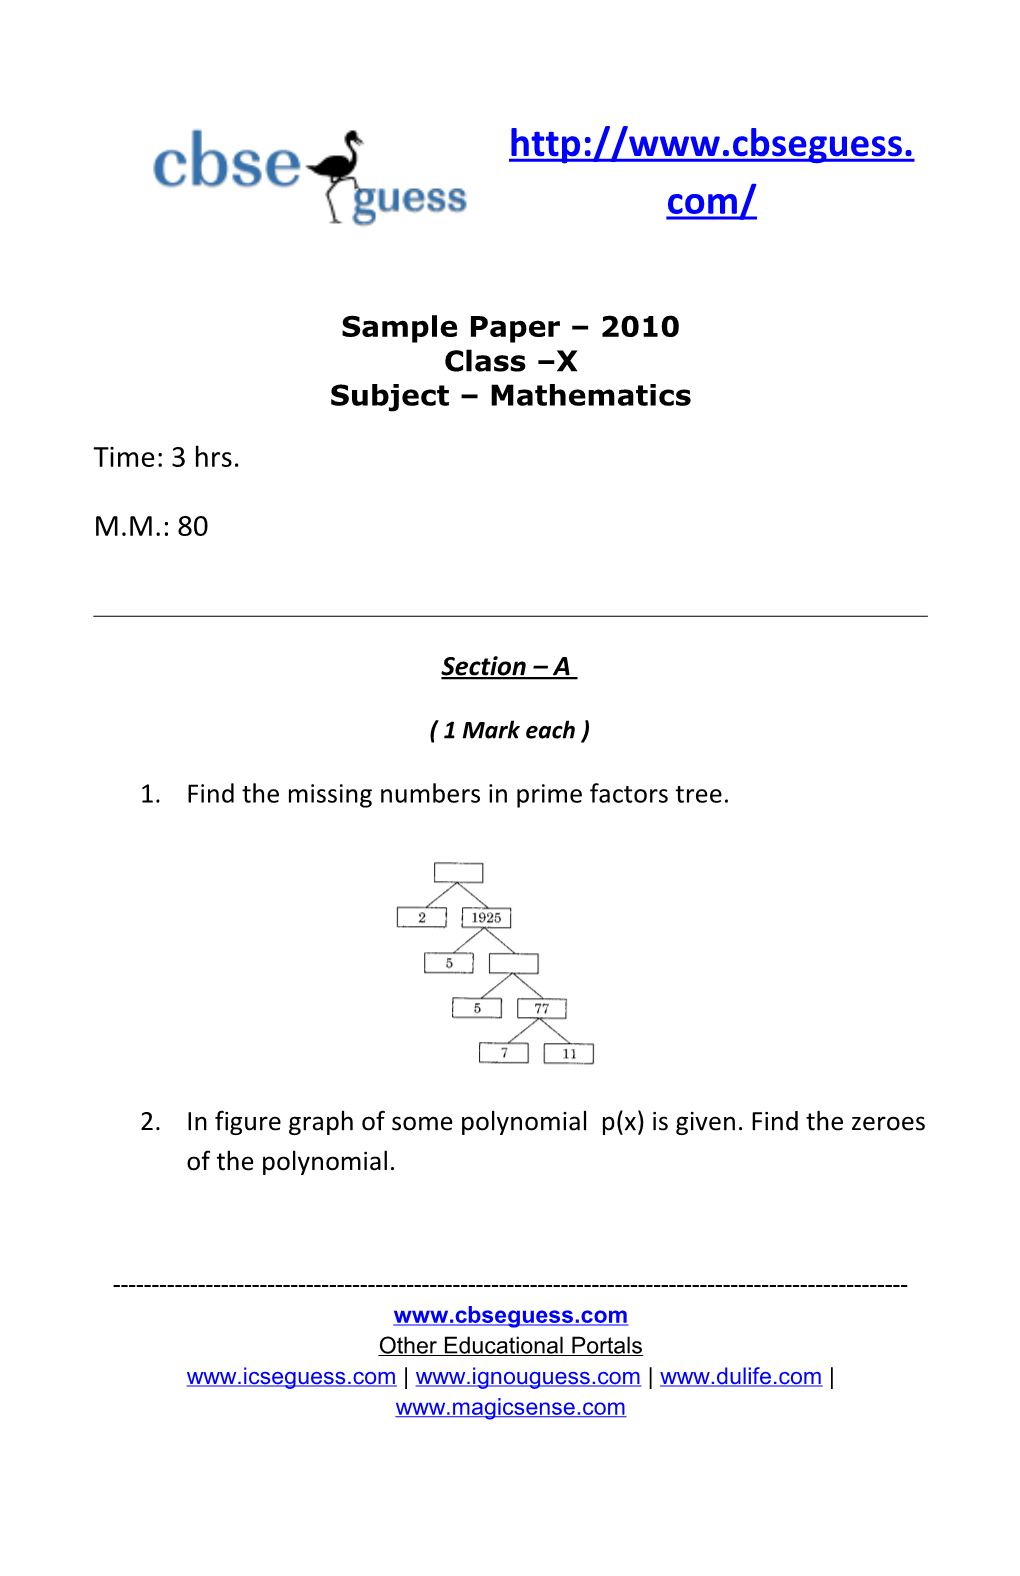 Sample Paper 2010 Class X Subject Mathematics